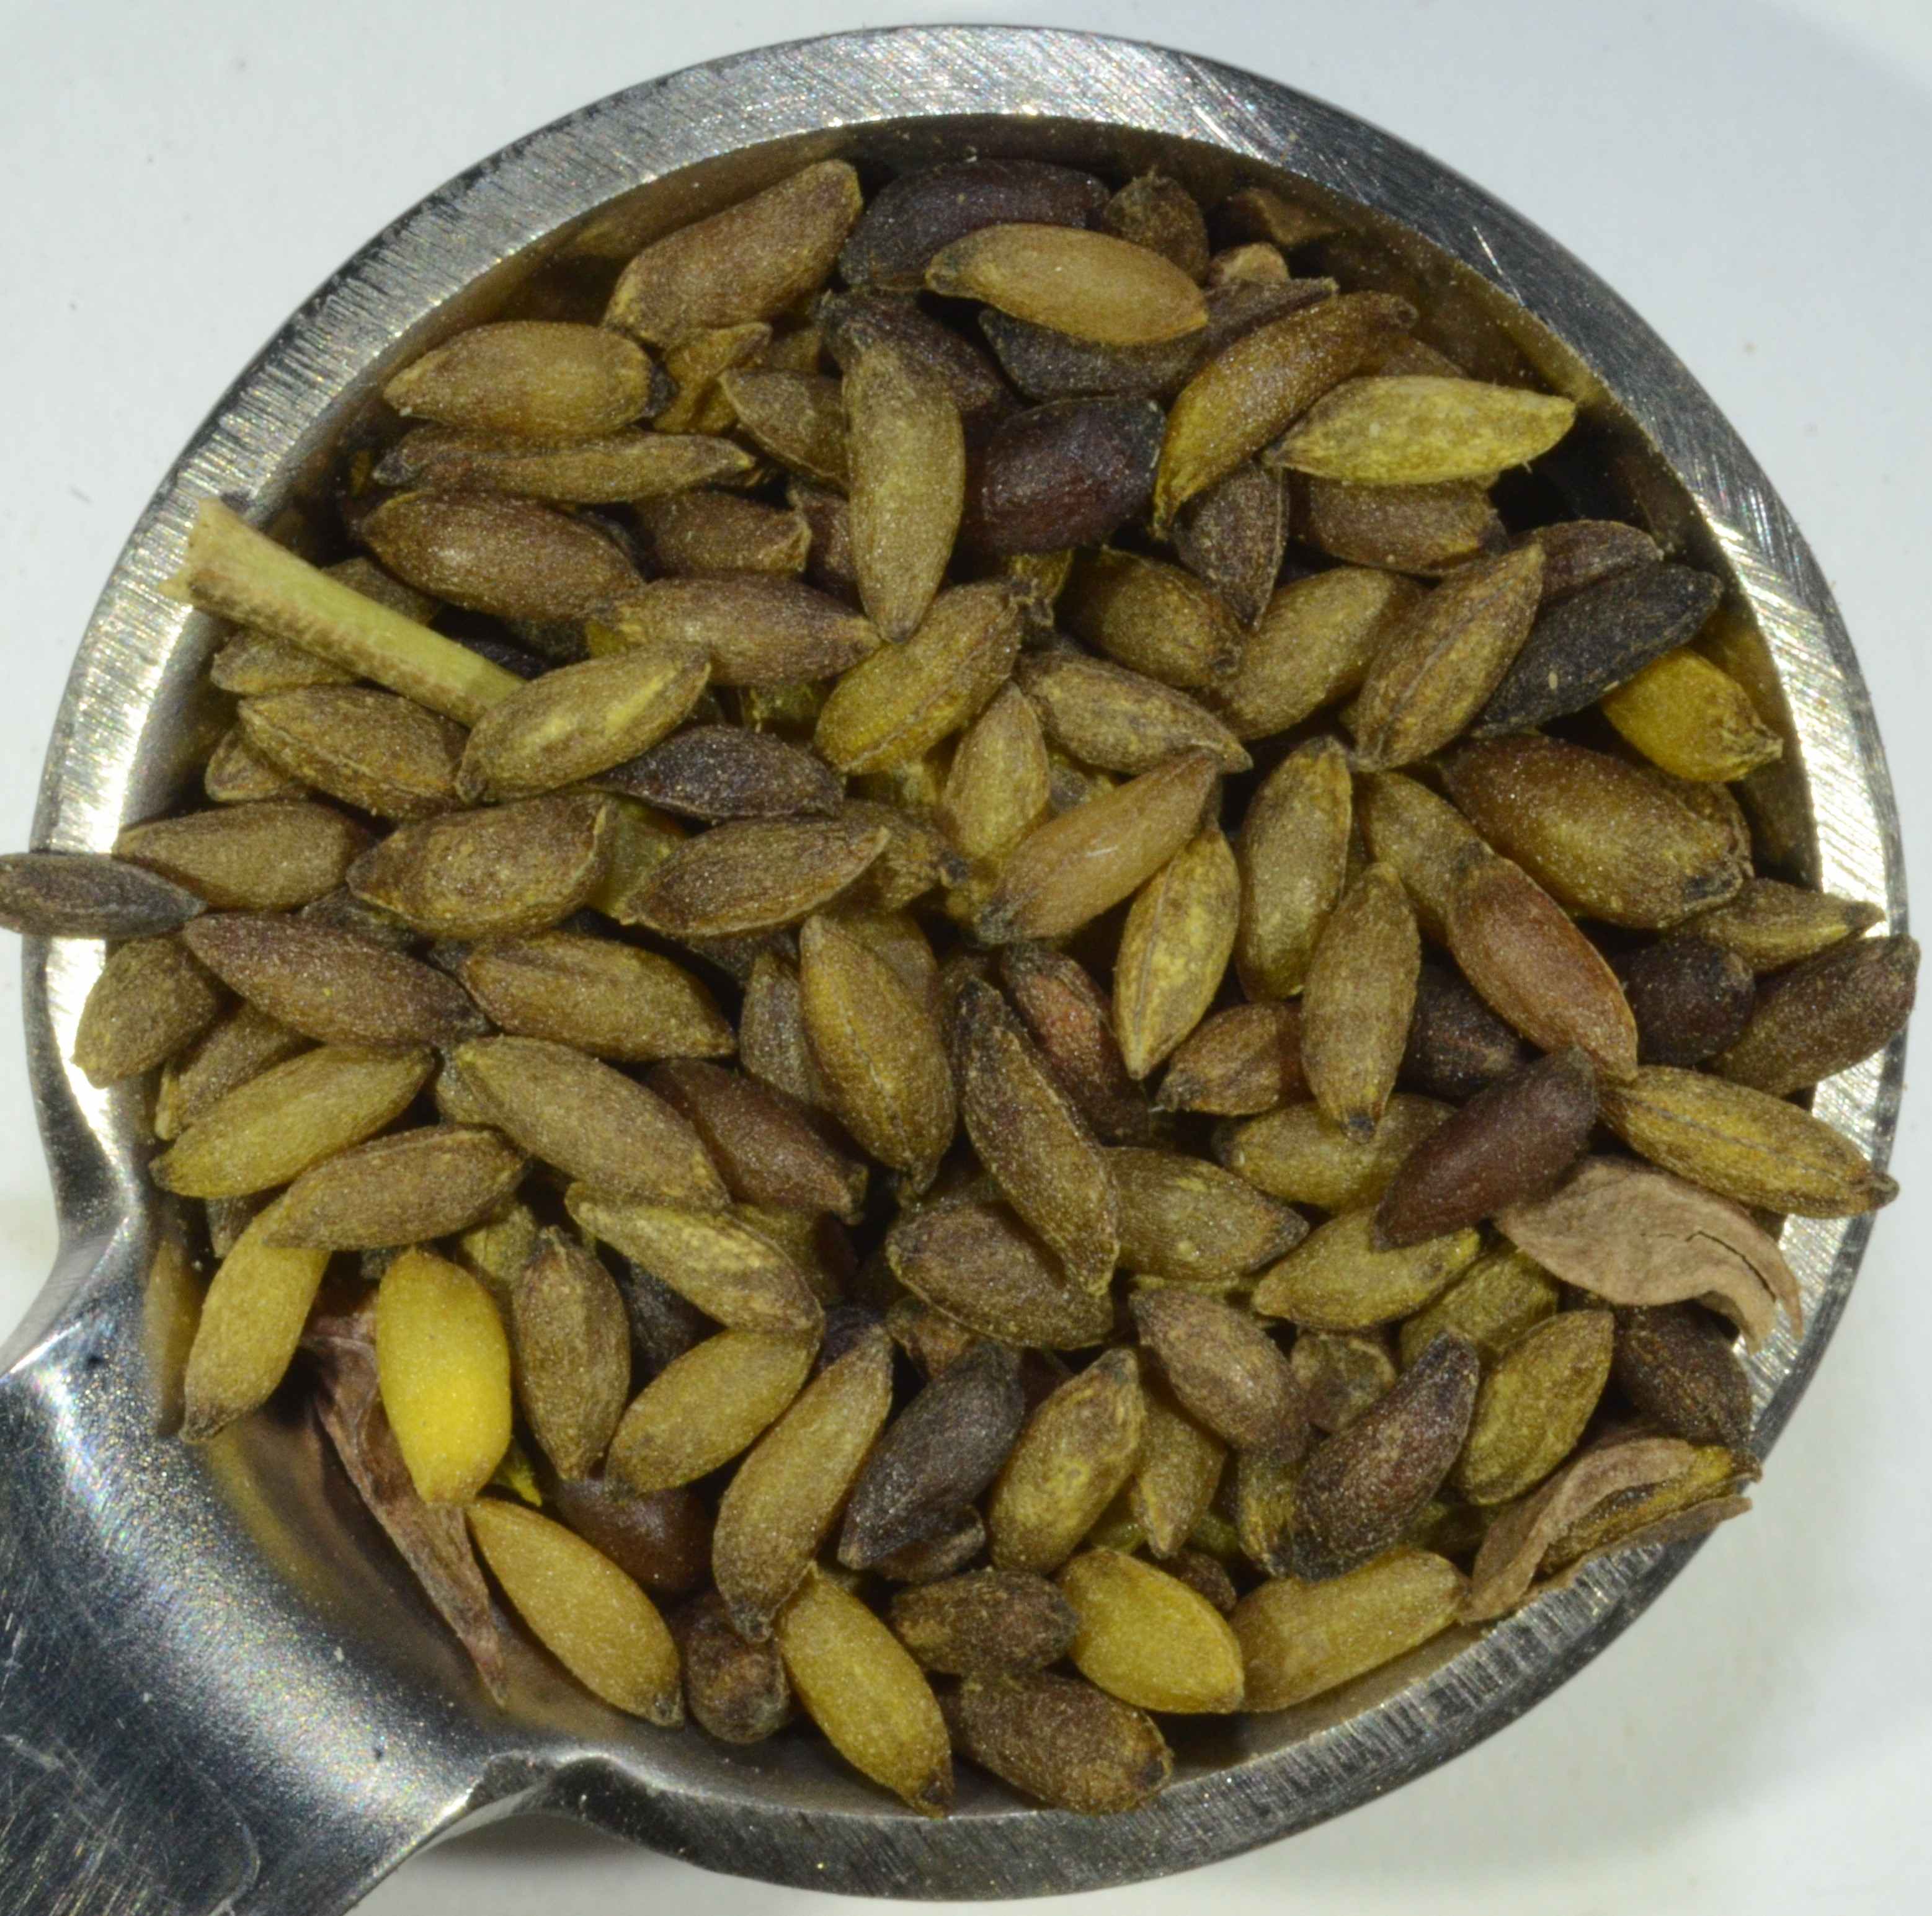 Thalictrum polycarpum seeds in a 1/4 tsp (2 cm diameter).